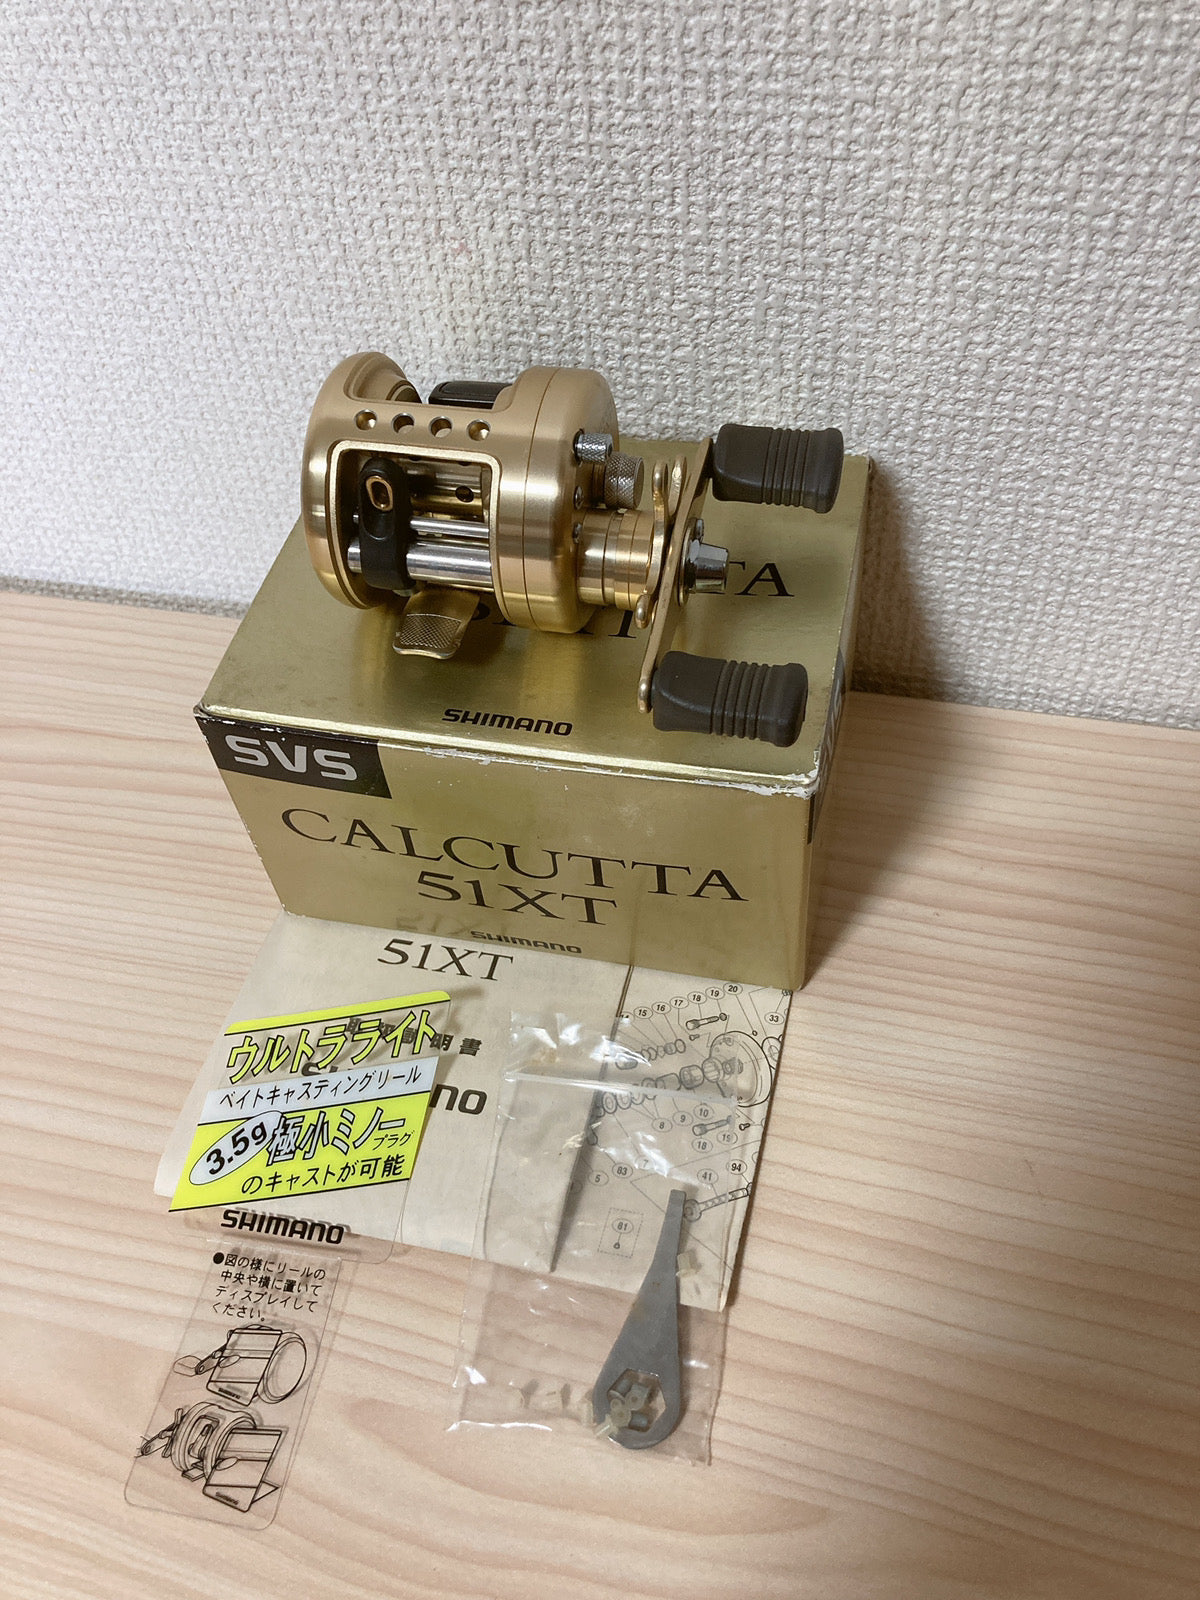 Shimano Baitcasting Reel CALCUTTA 51XT Left RH385051 Gear Ratio 5.0:1